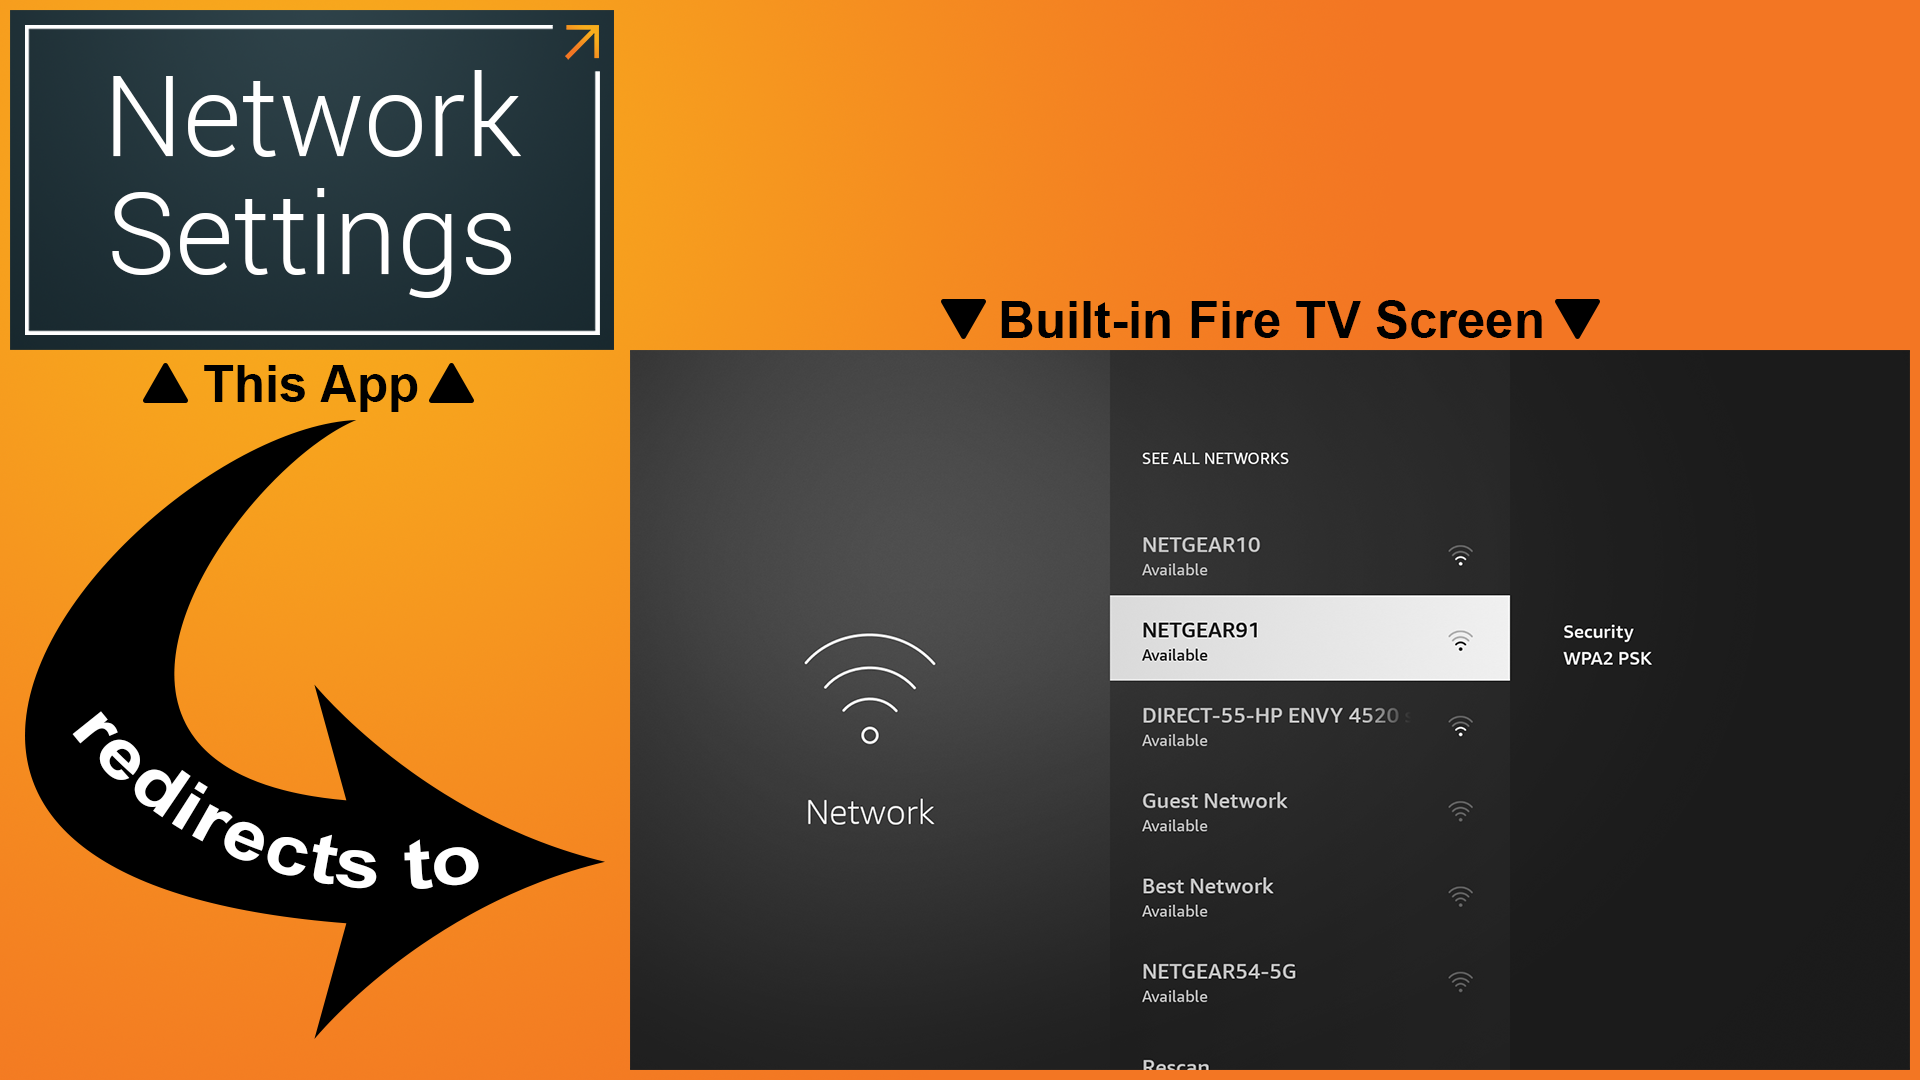 Network settings screen